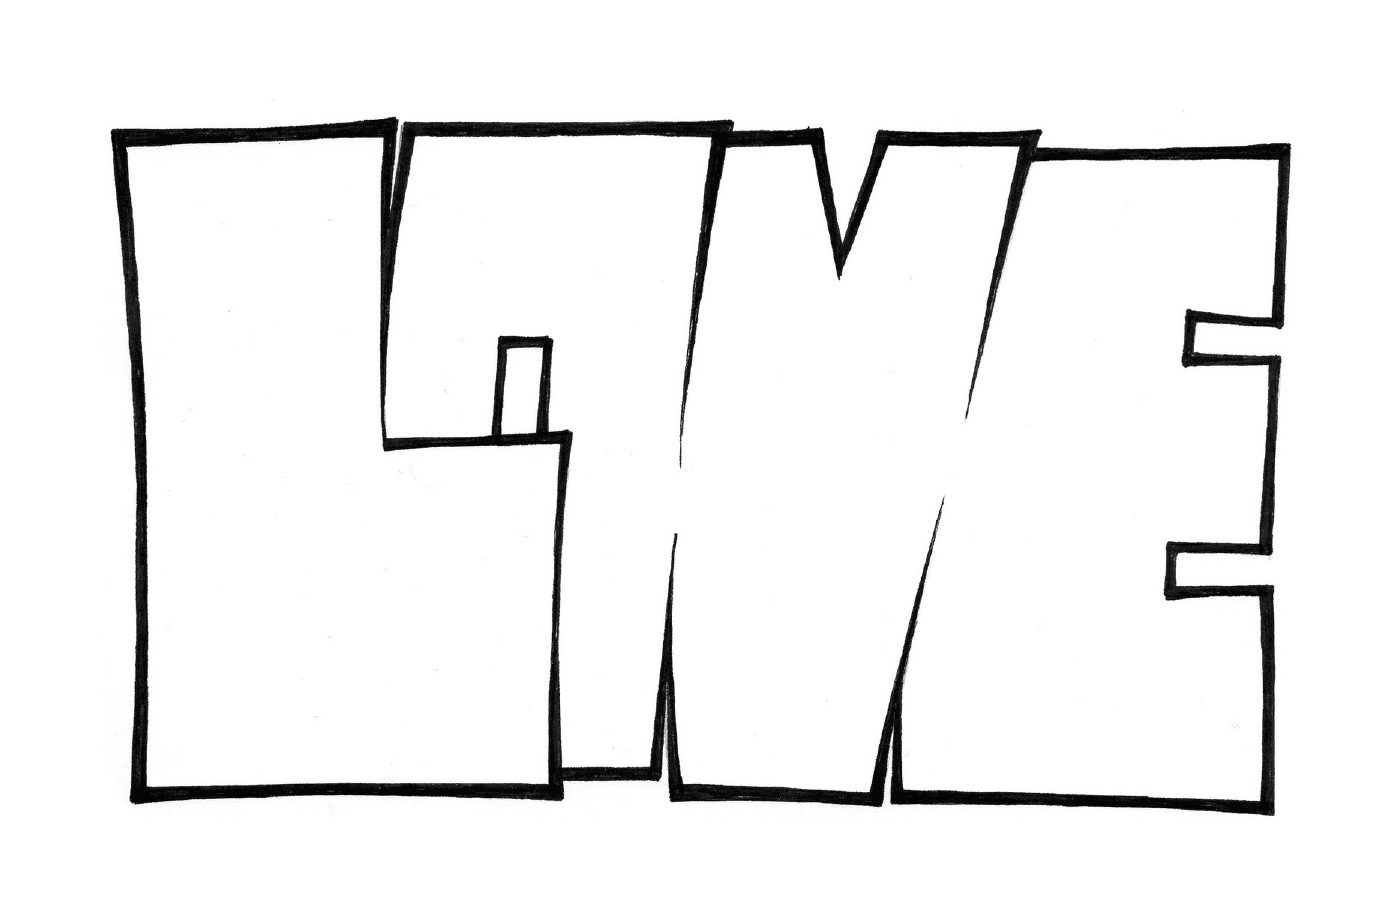  Le lettere S, V e X 